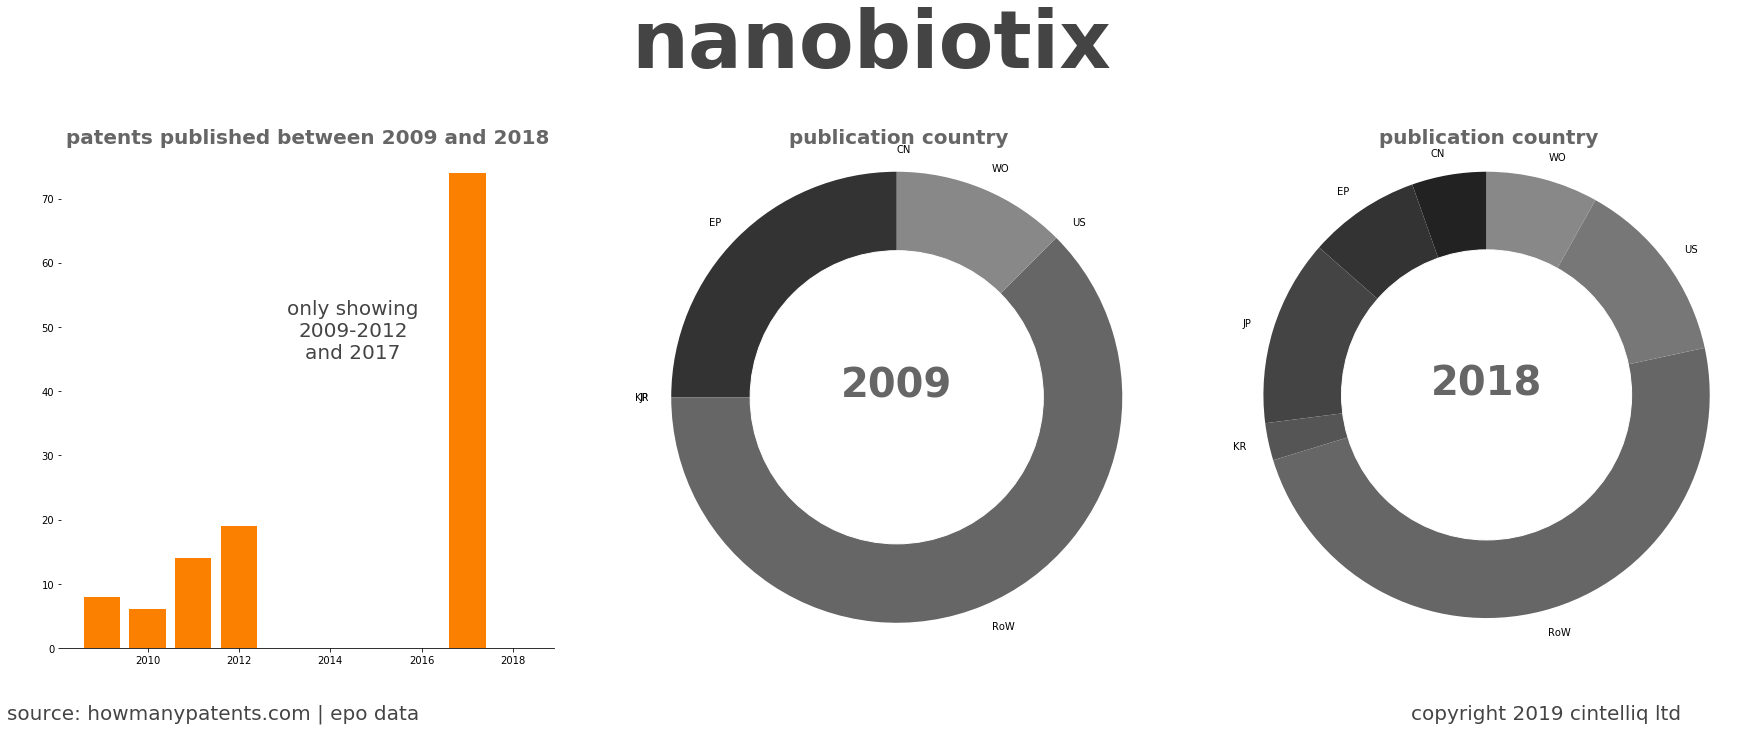 summary of patents for Nanobiotix